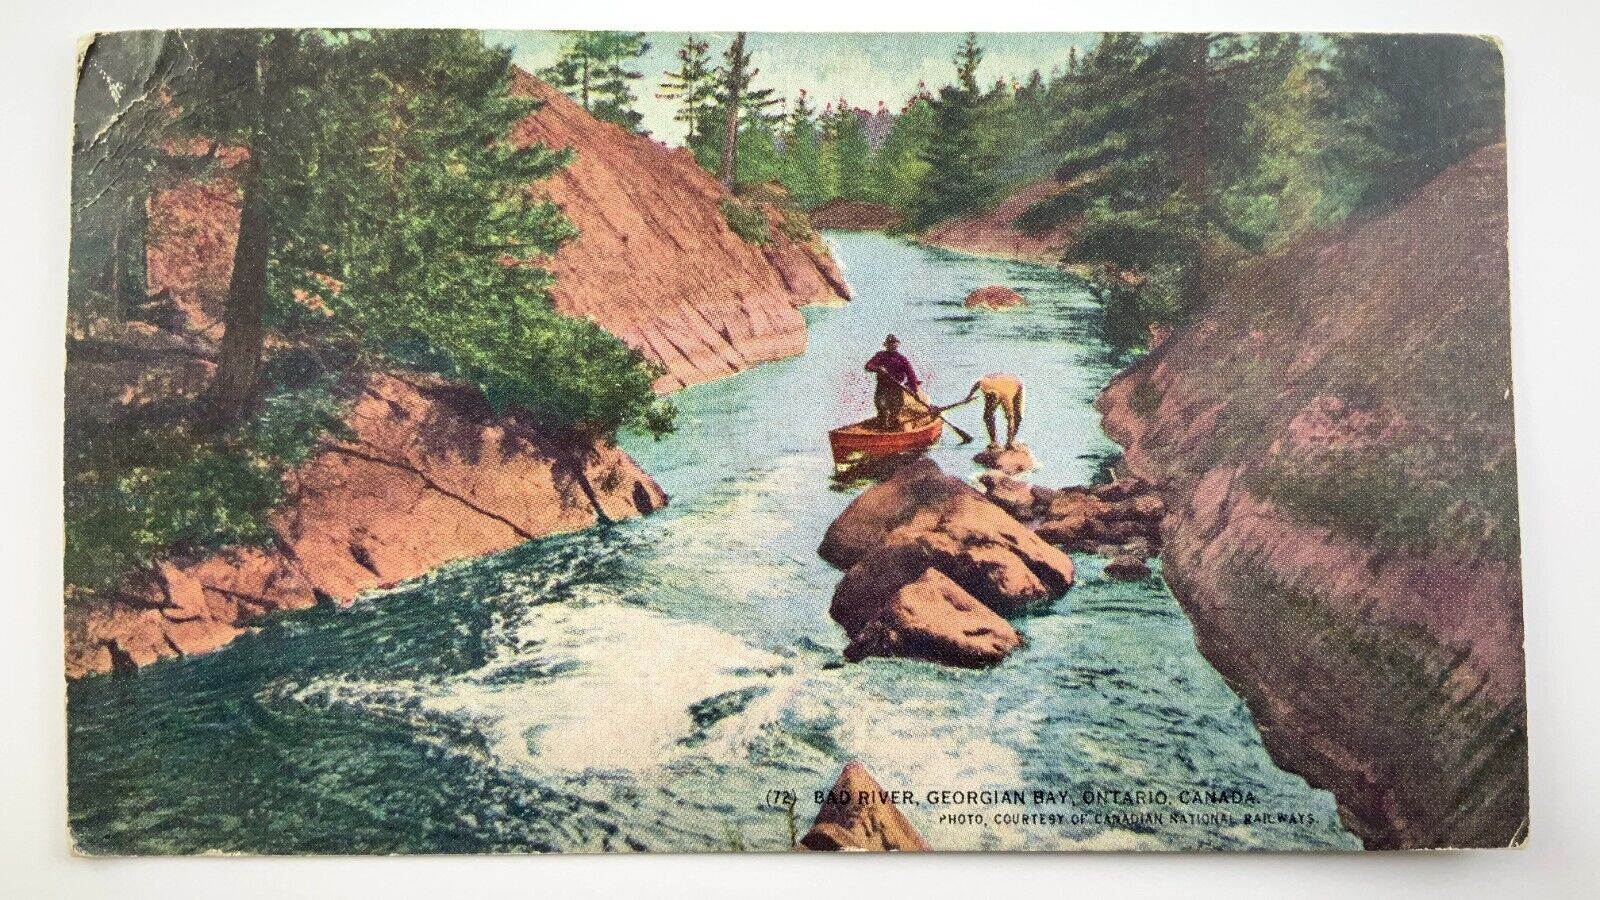 Bad River Georgian Bay Ontario Postcard CNR Canadian National Railway EE583